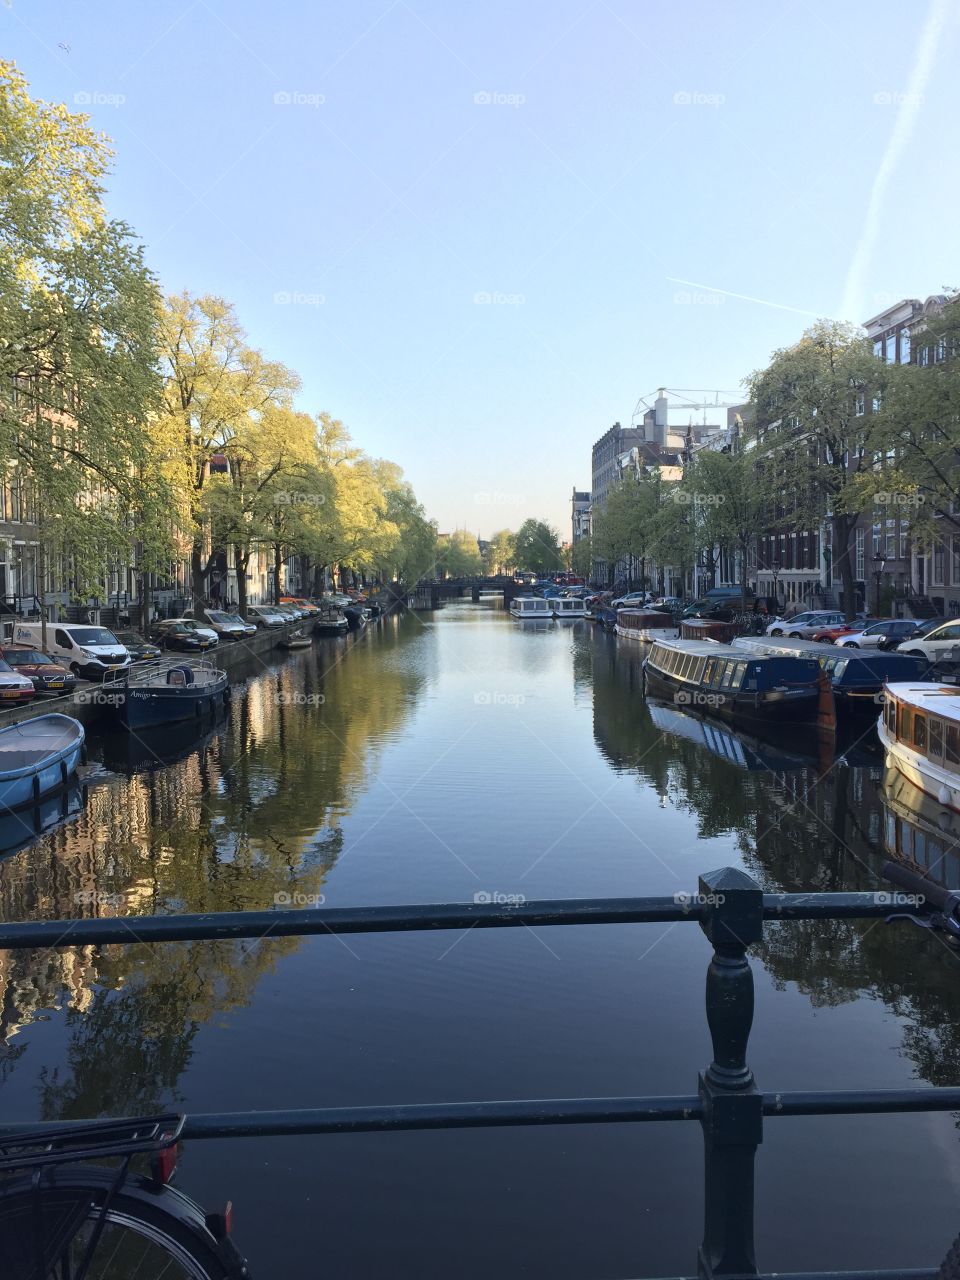 Travel in Amsterdam 